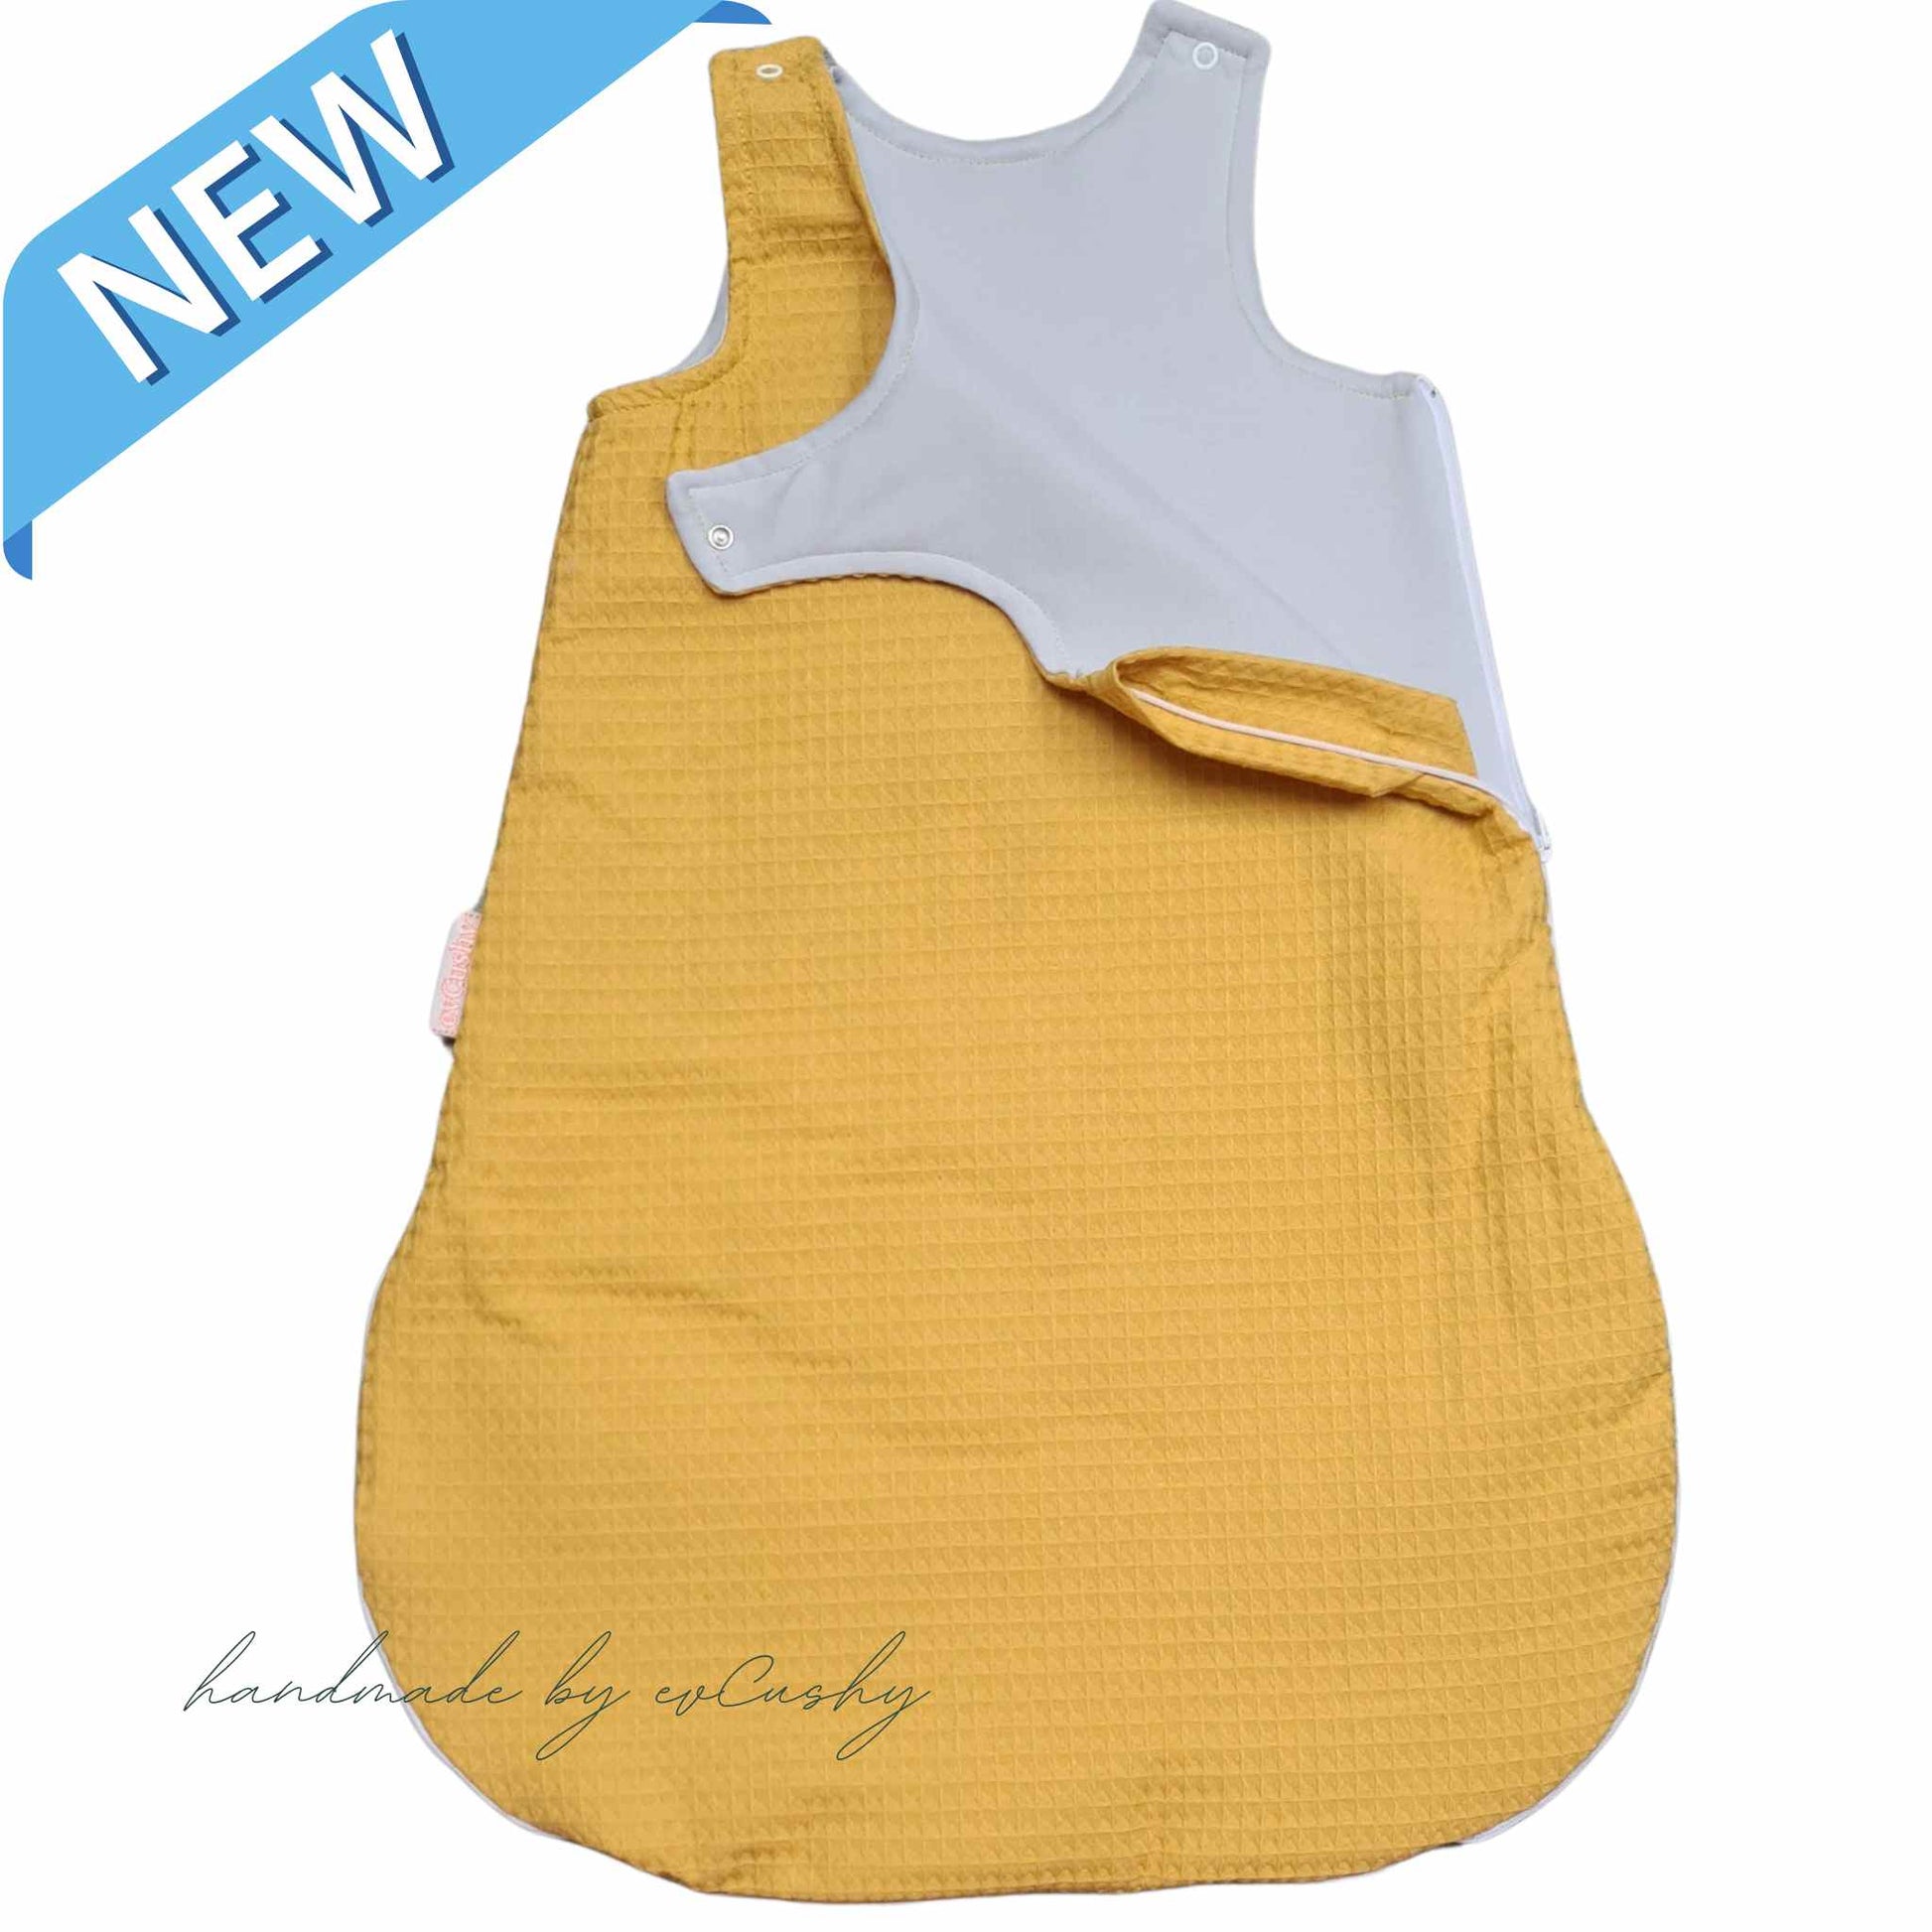 plain sleeping bag for baby saffron mustard with grey lining 100% cotton 0-6 months in Ireland